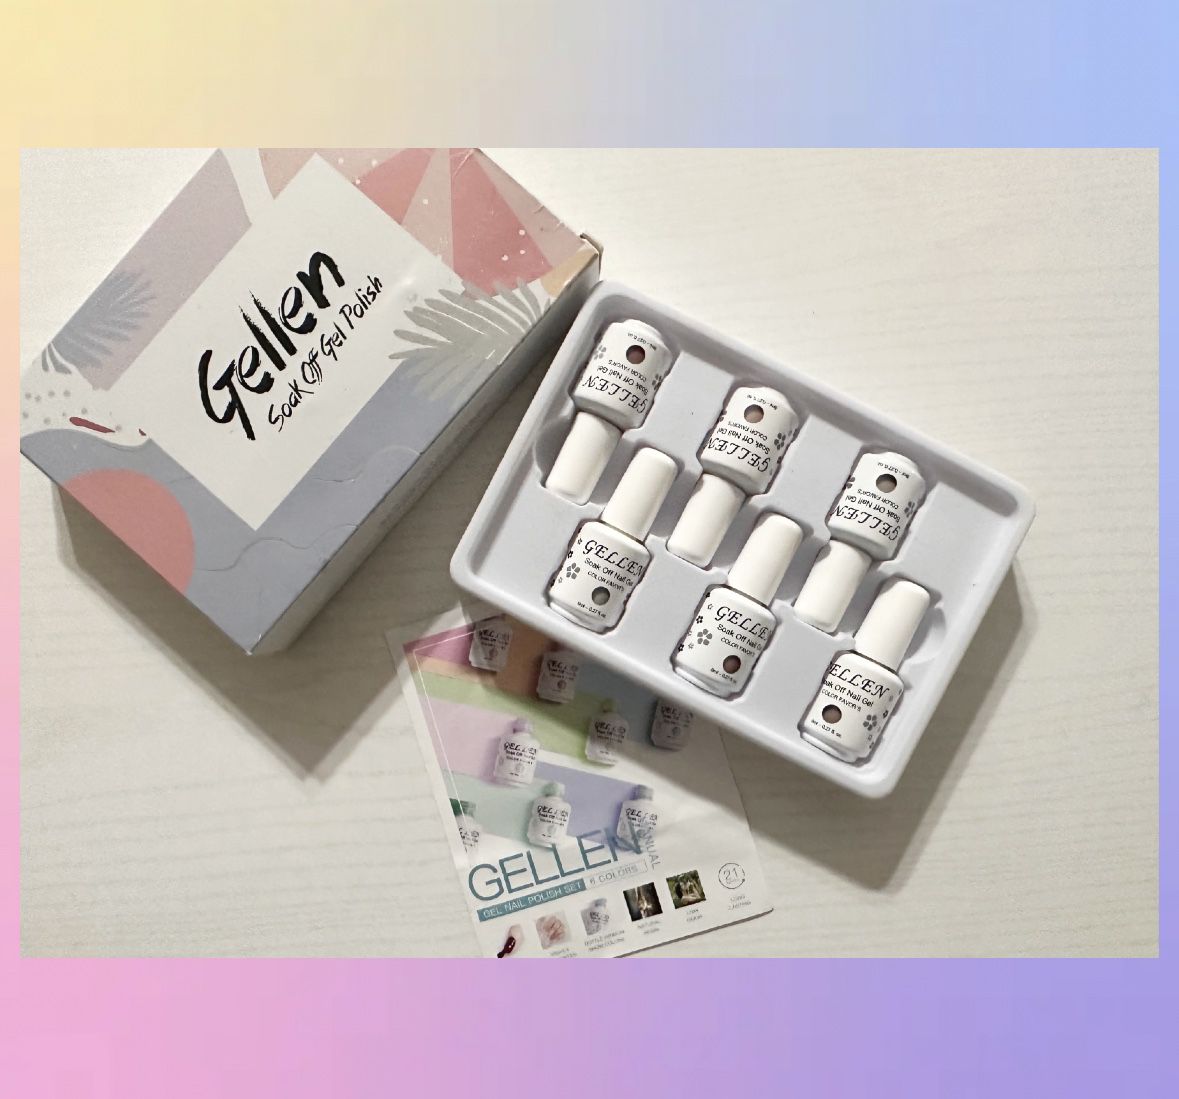 Gellen Gel Nail Polish Box Set of 6 UV LED Soak Off Pinks Matte Mauve New In Box